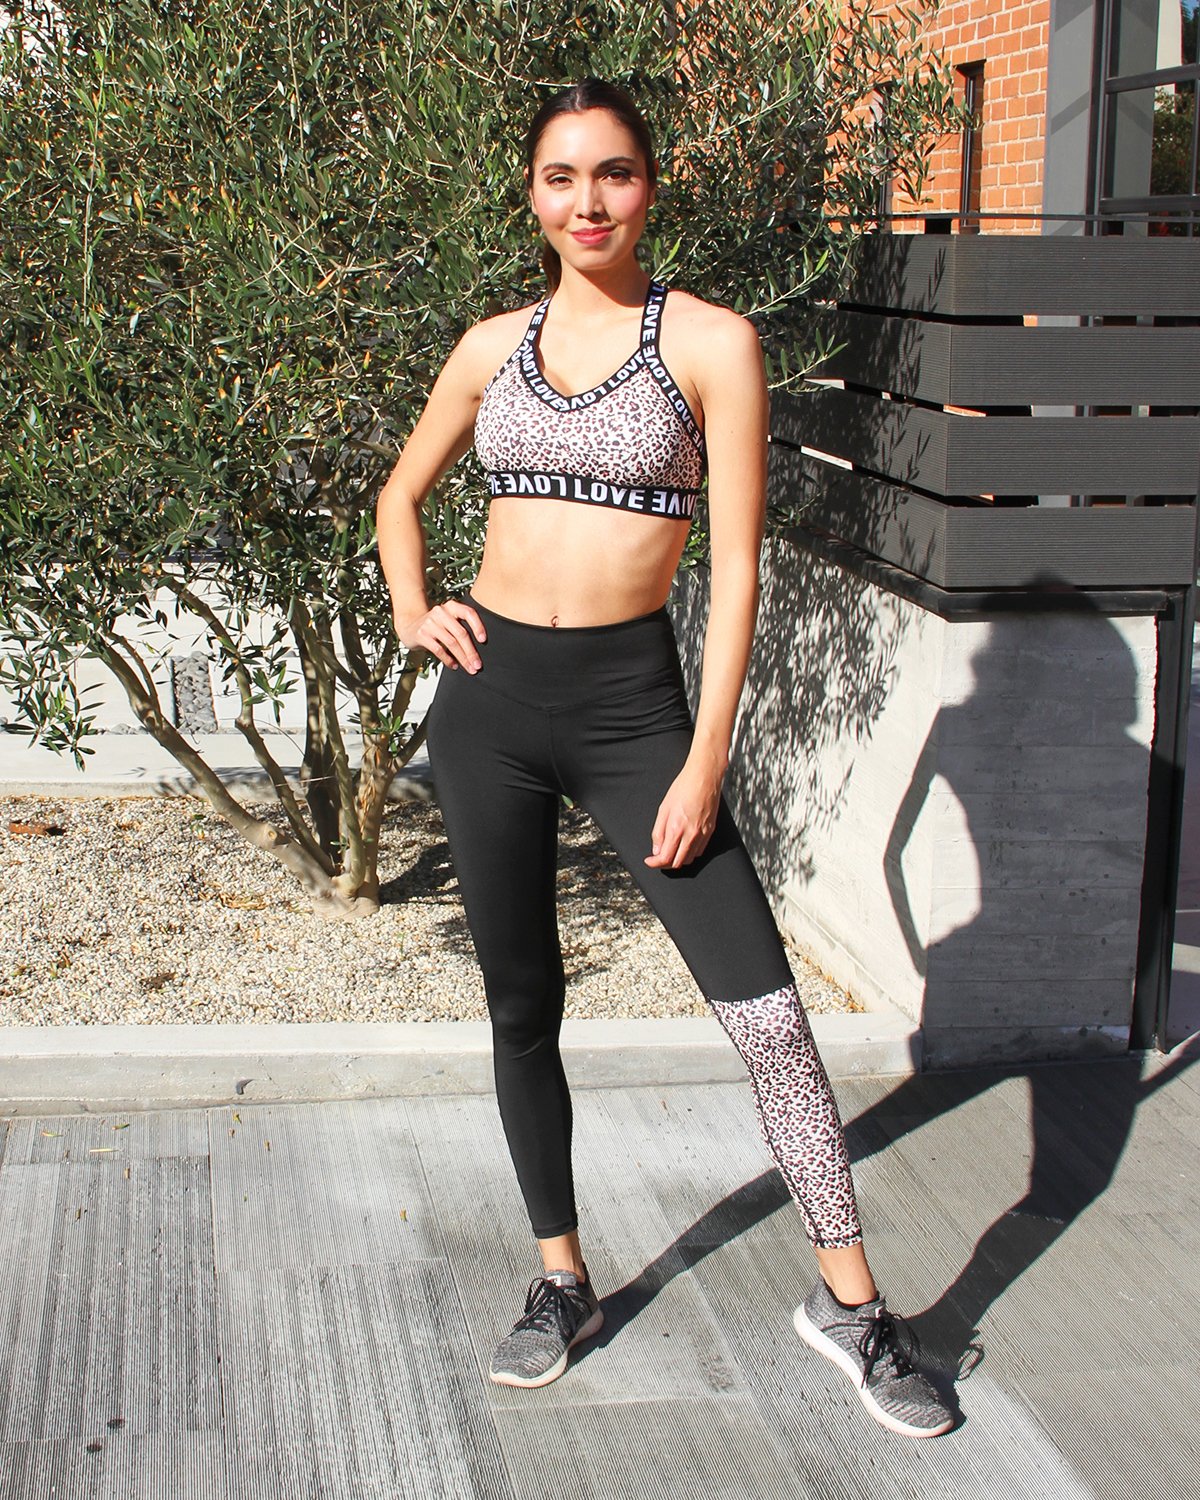 Leggings & Sports Bra Set - Black & Leopard Print - Women's Activewear Set from fluentclothing.com